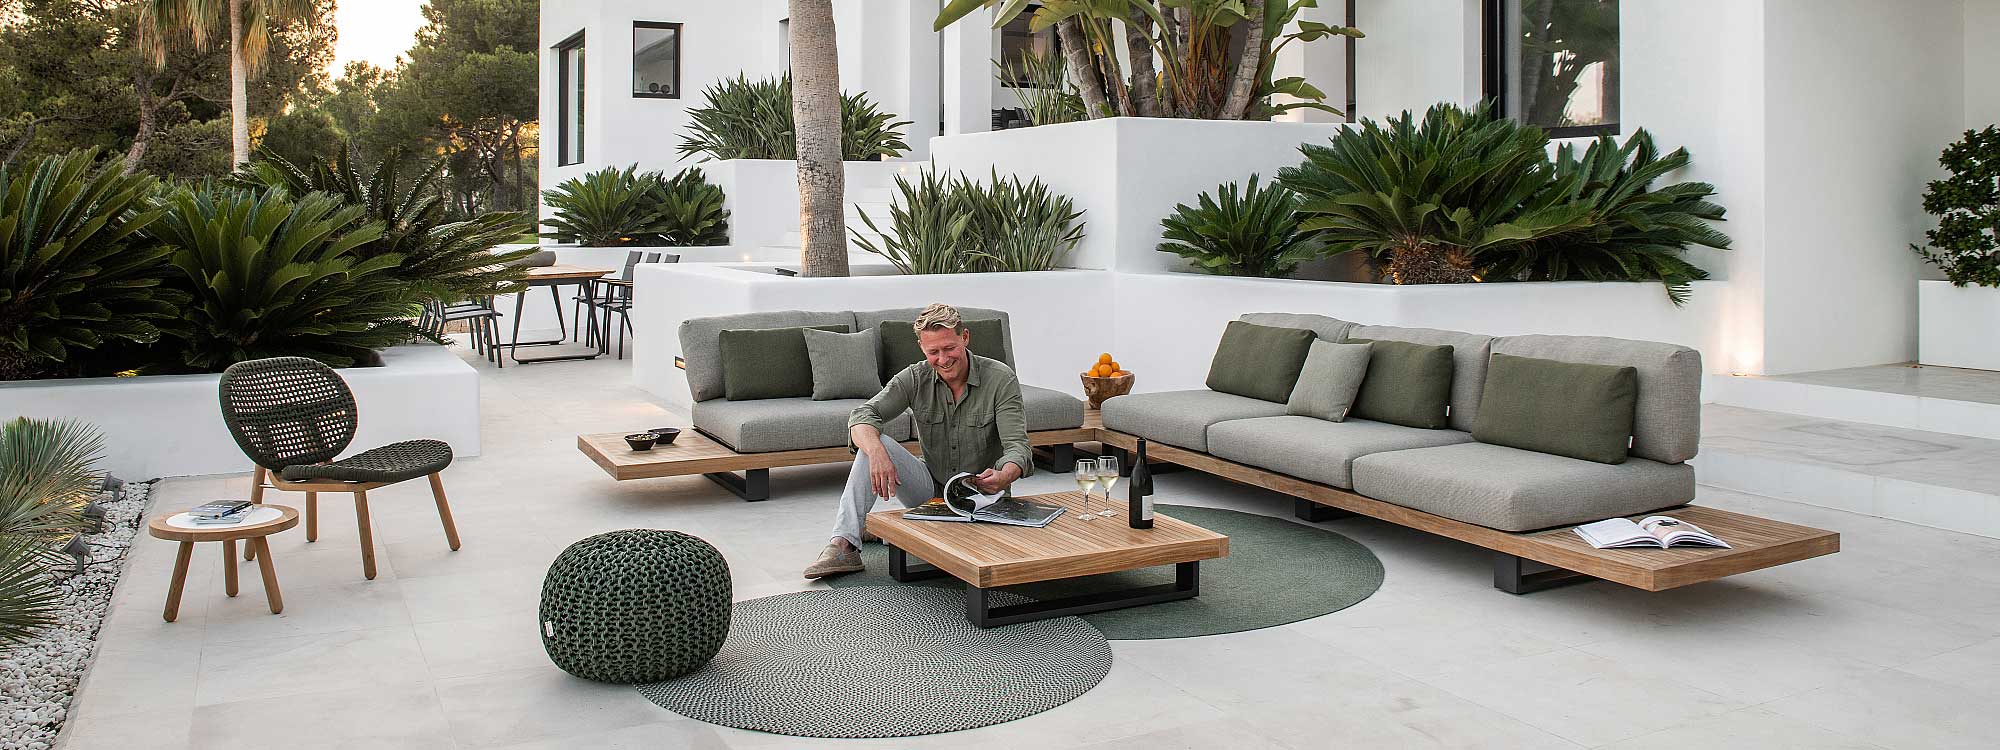 Truro Lounge FSC teak sofa is trendsetting outdoor furniture in luxury garden sofa materials by Jati & Kebon sustainable garden furniture company